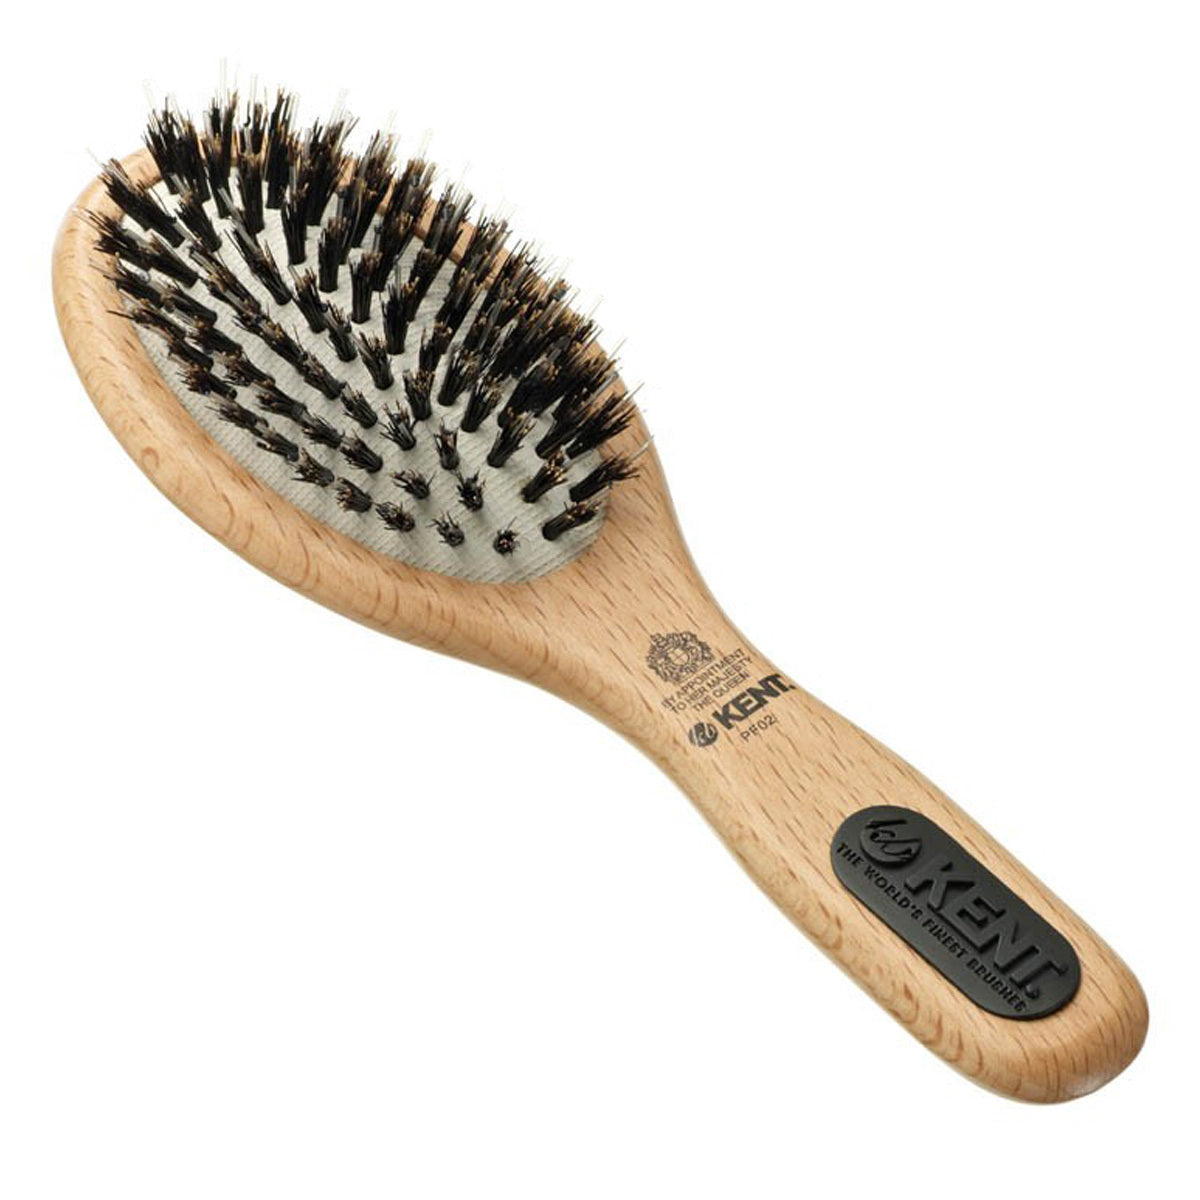 Primary image of Natural Shine Small Porcupine + Bristle Hairbrush - PF02